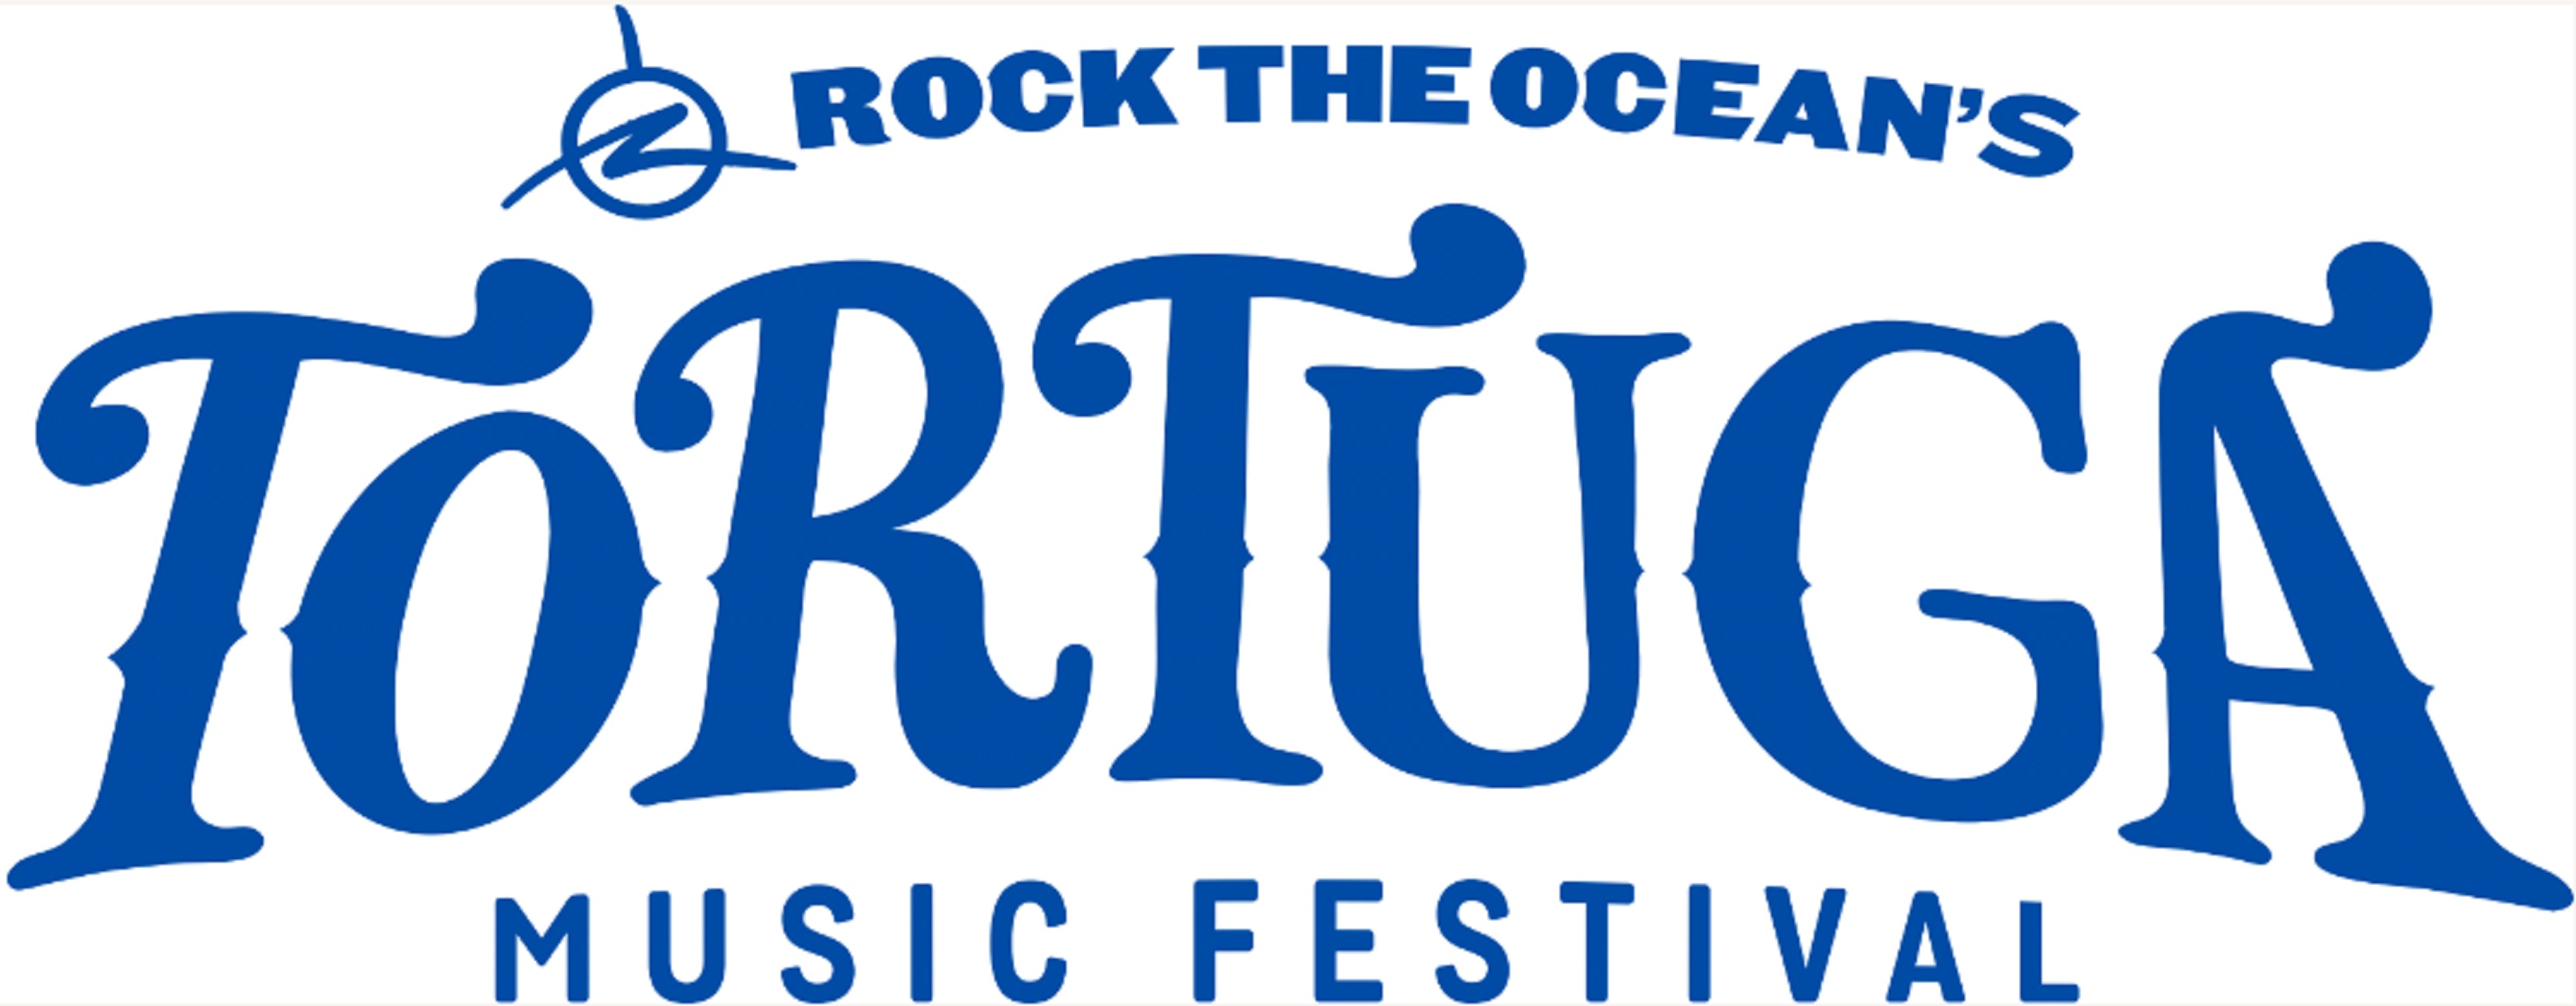 Rock The Ocean’s Tortuga Music Festival Wins “Sustainability Leadership” Award